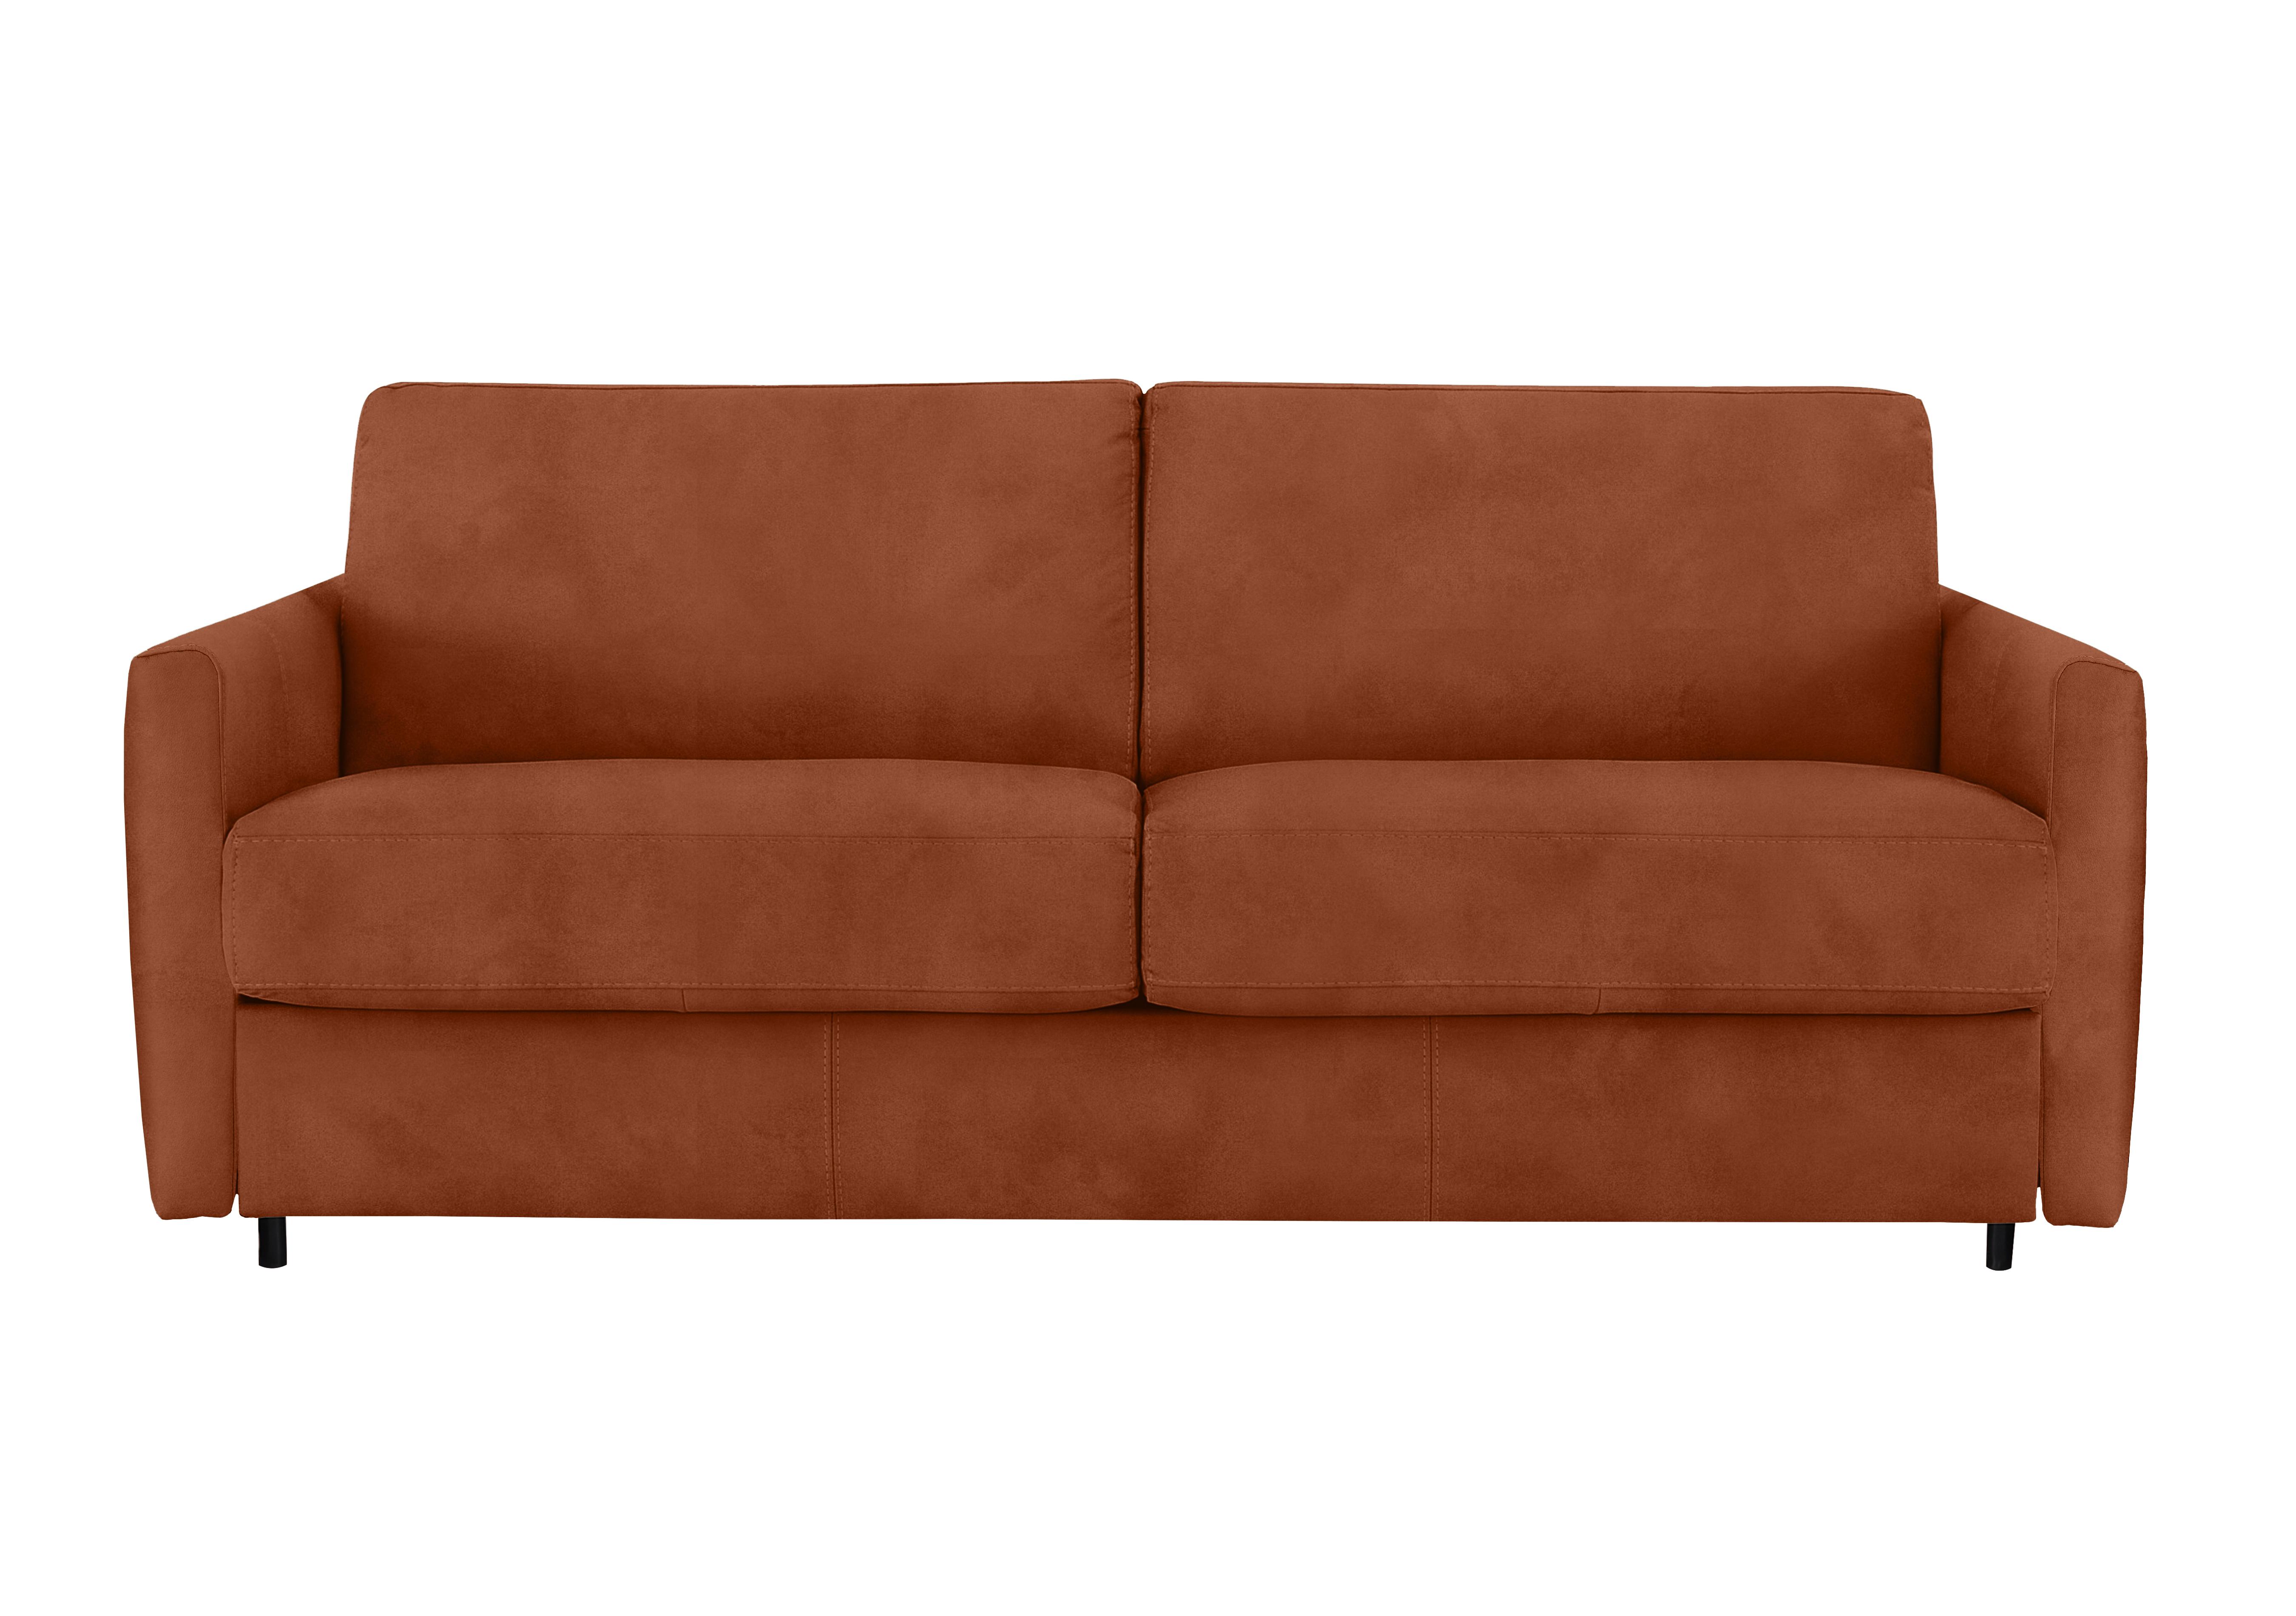 Alcova 3 Seater Fabric Sofa Bed with Slim Arms in Selma Mattone on Furniture Village